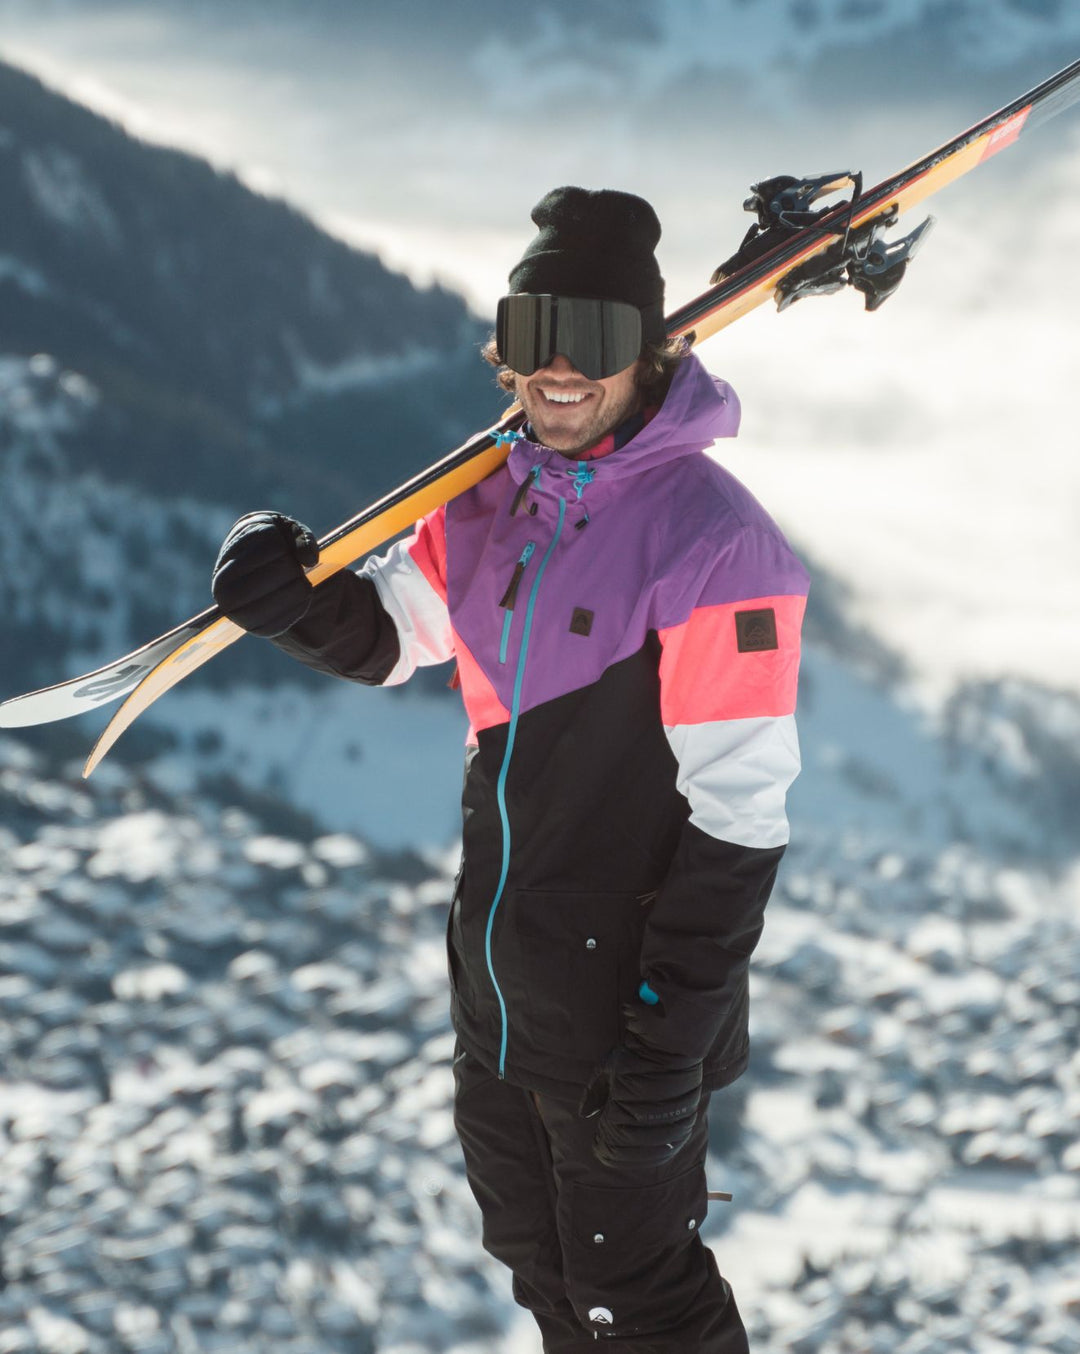 Veste de ski Snow - Vert Fluo Carbone